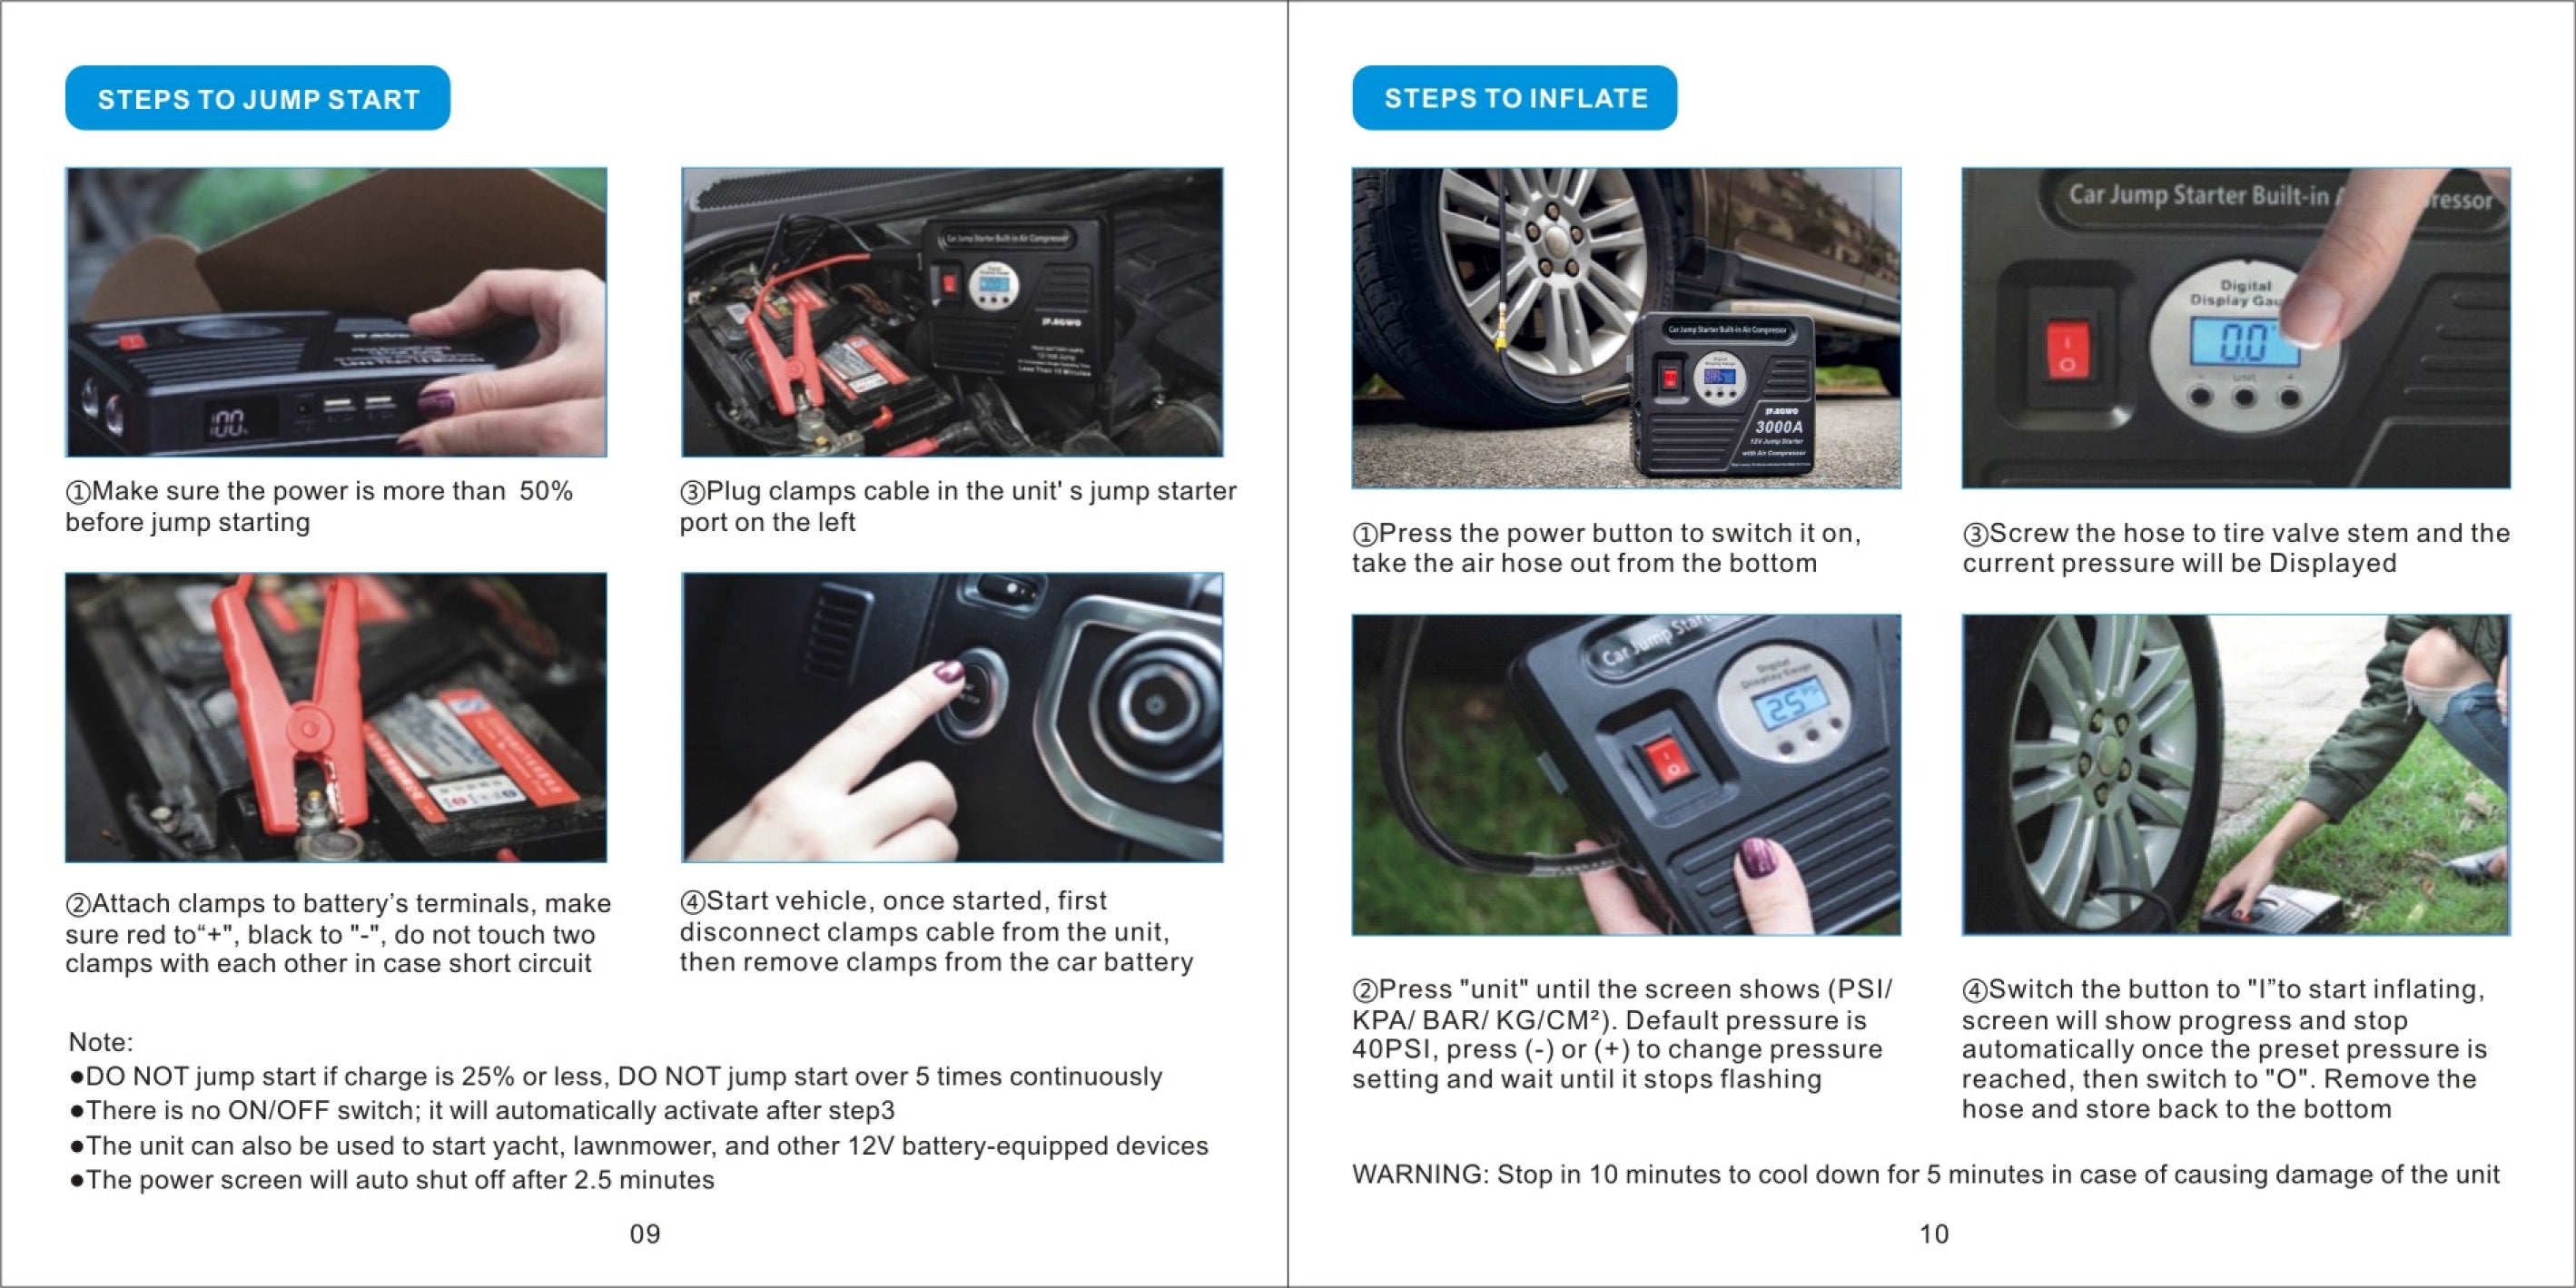 Lenercom 4-in-1 Car Jump Starter, Air Pump,Powerbank & Light by